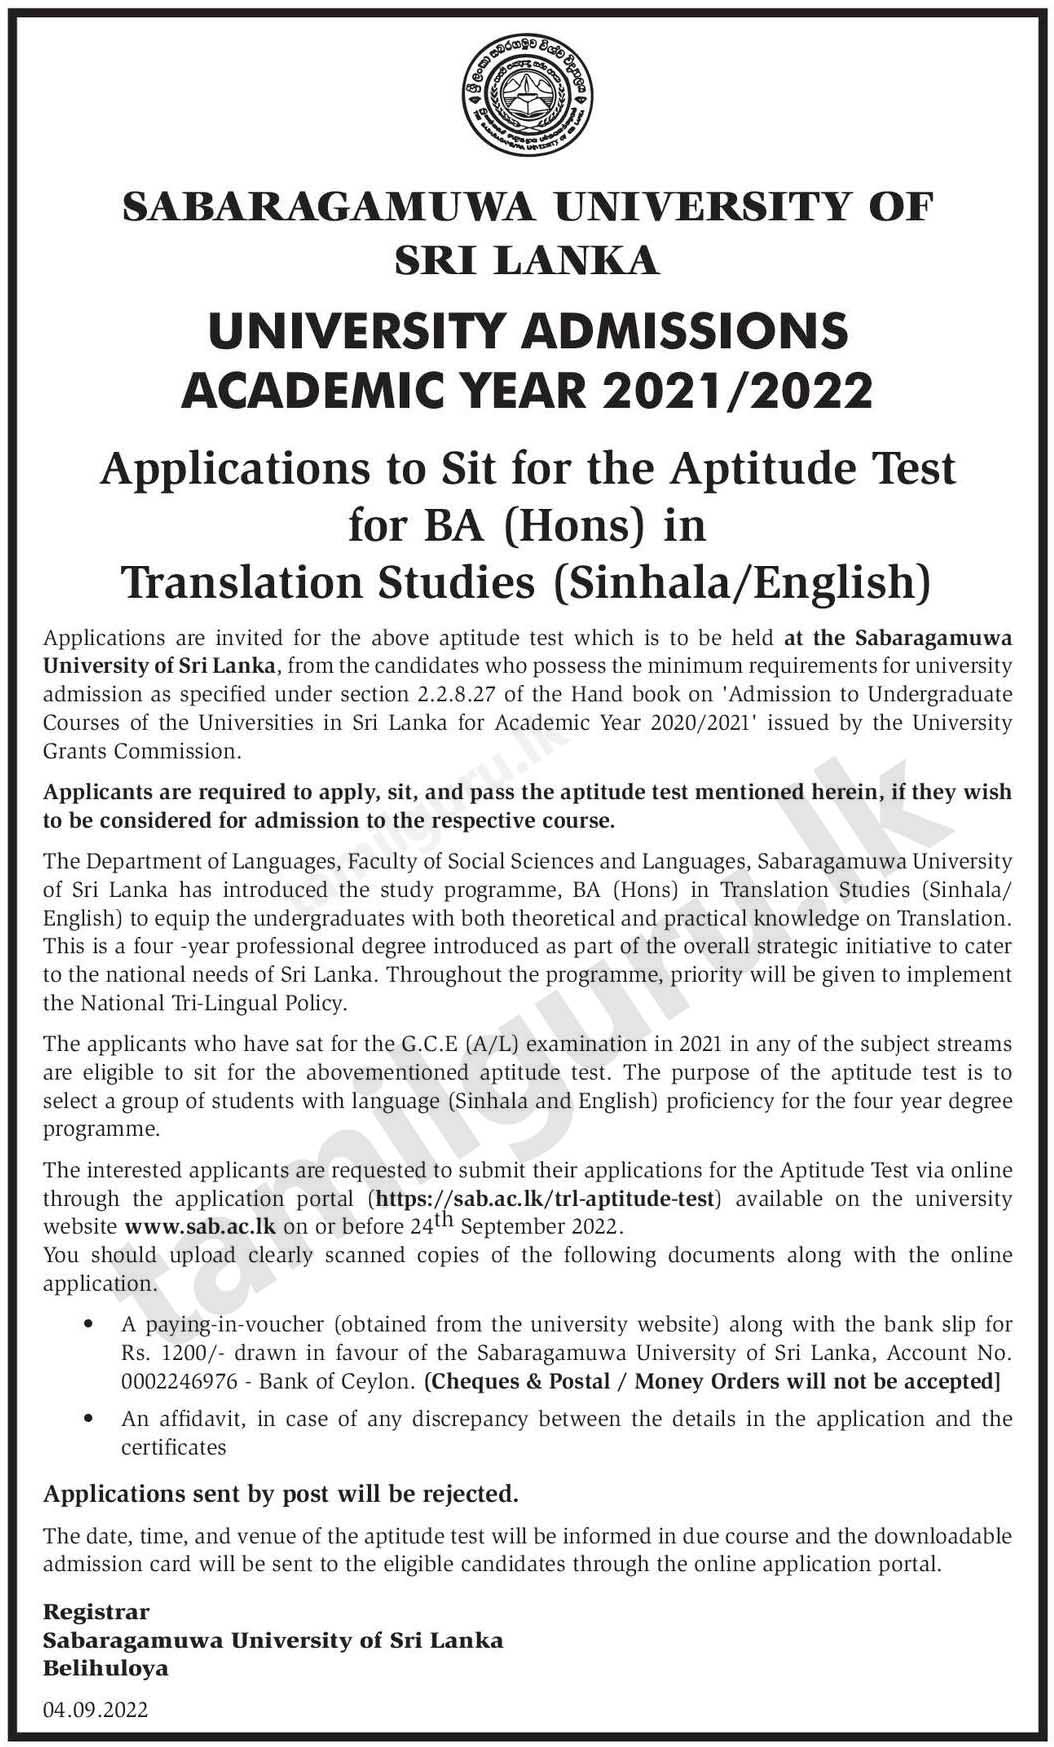 Sabaragamuwa University Translation Studies Aptitude Test Application 2022